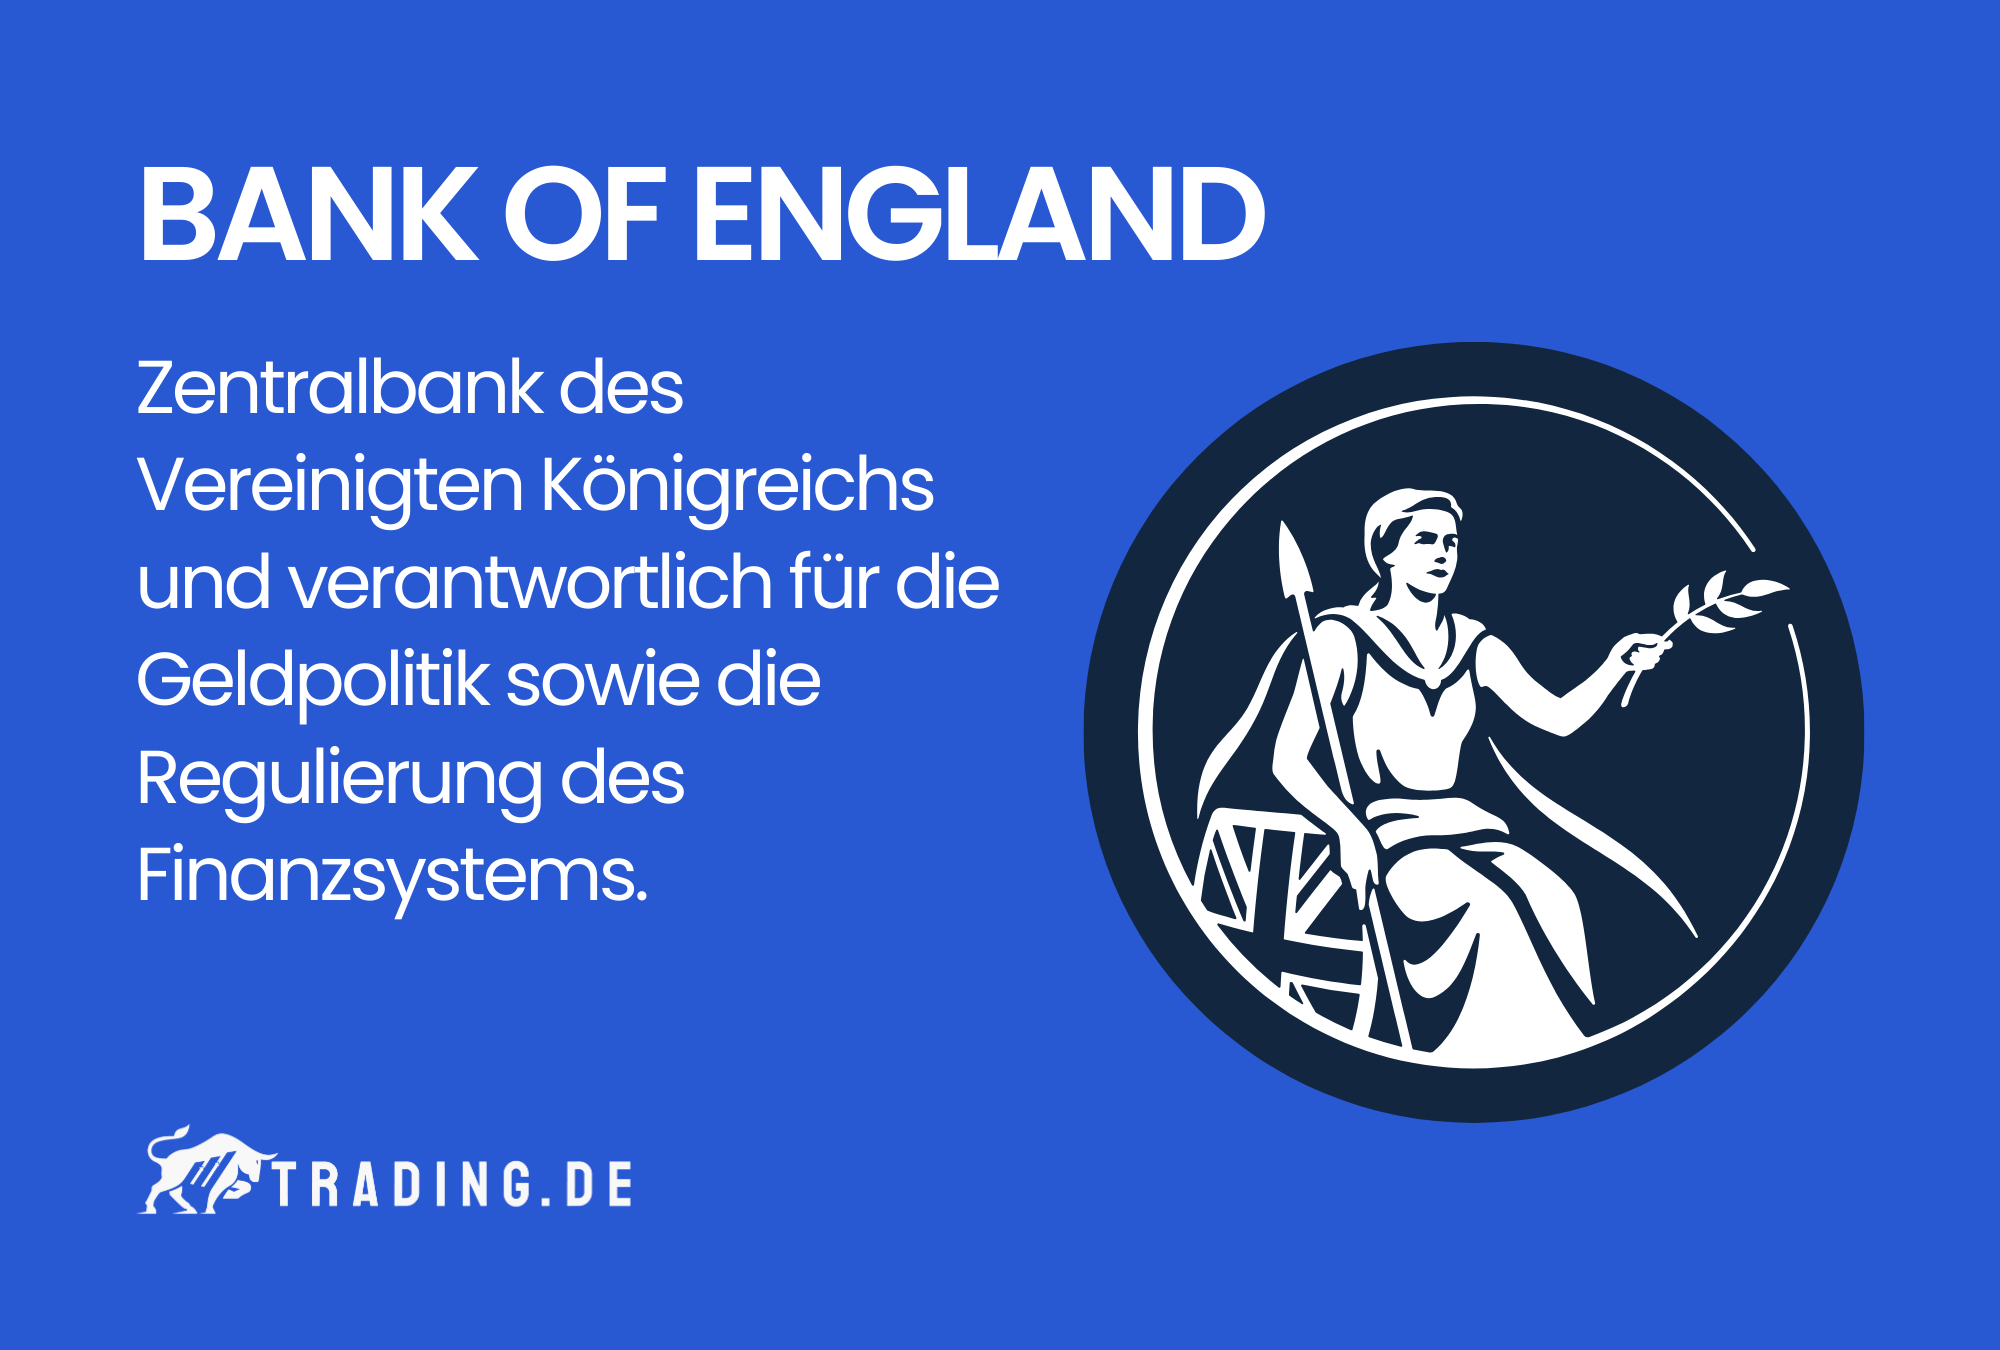 Bank of England Definition & Erklärung